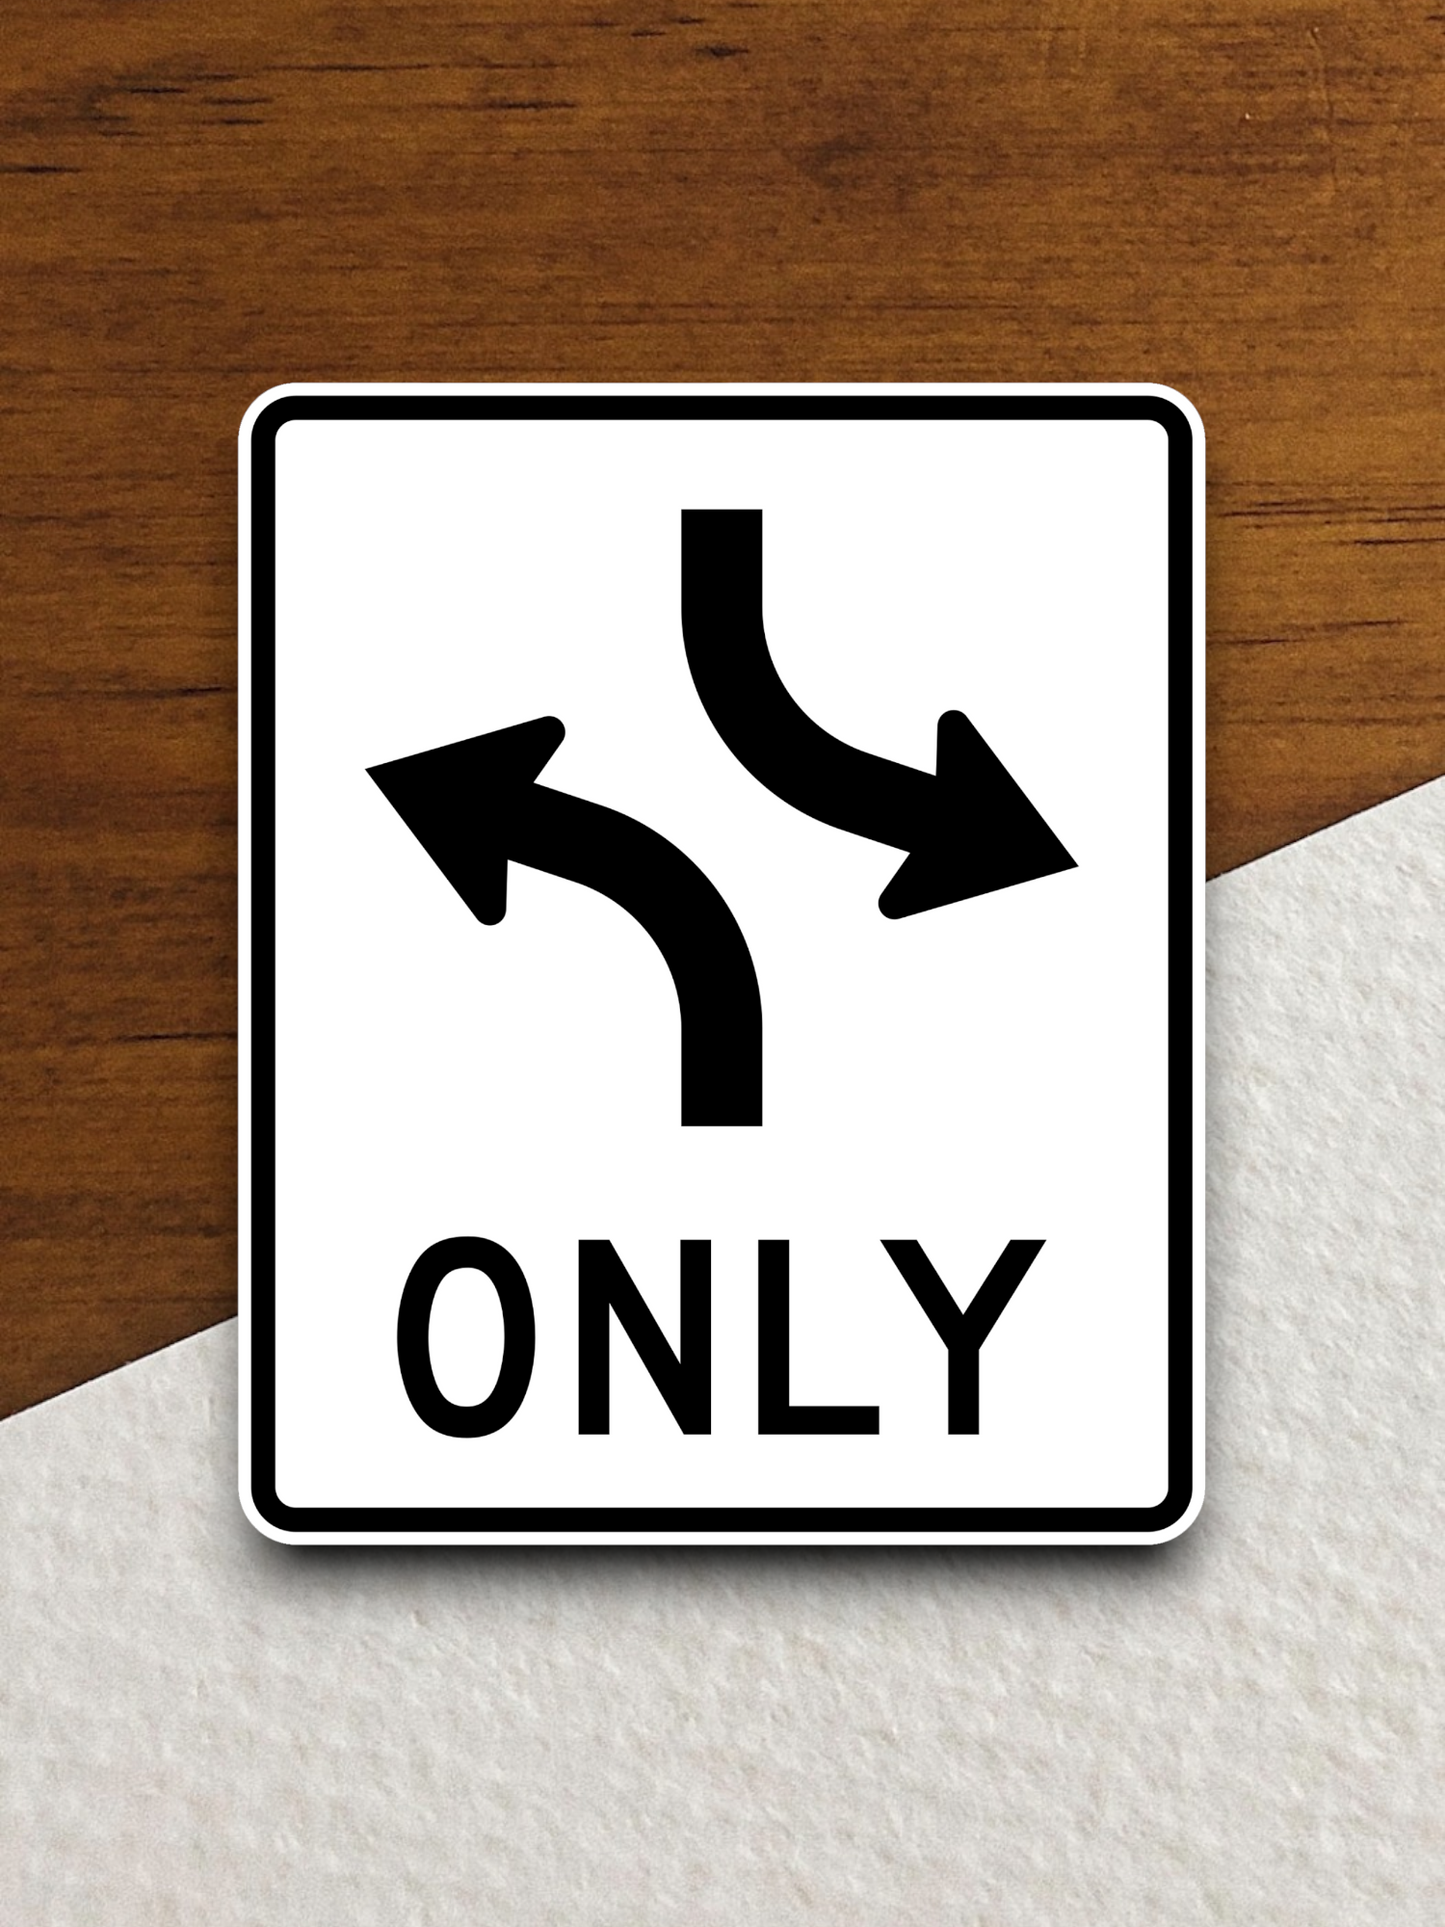 Concurrent left turn lane United States Road Sign Sticker